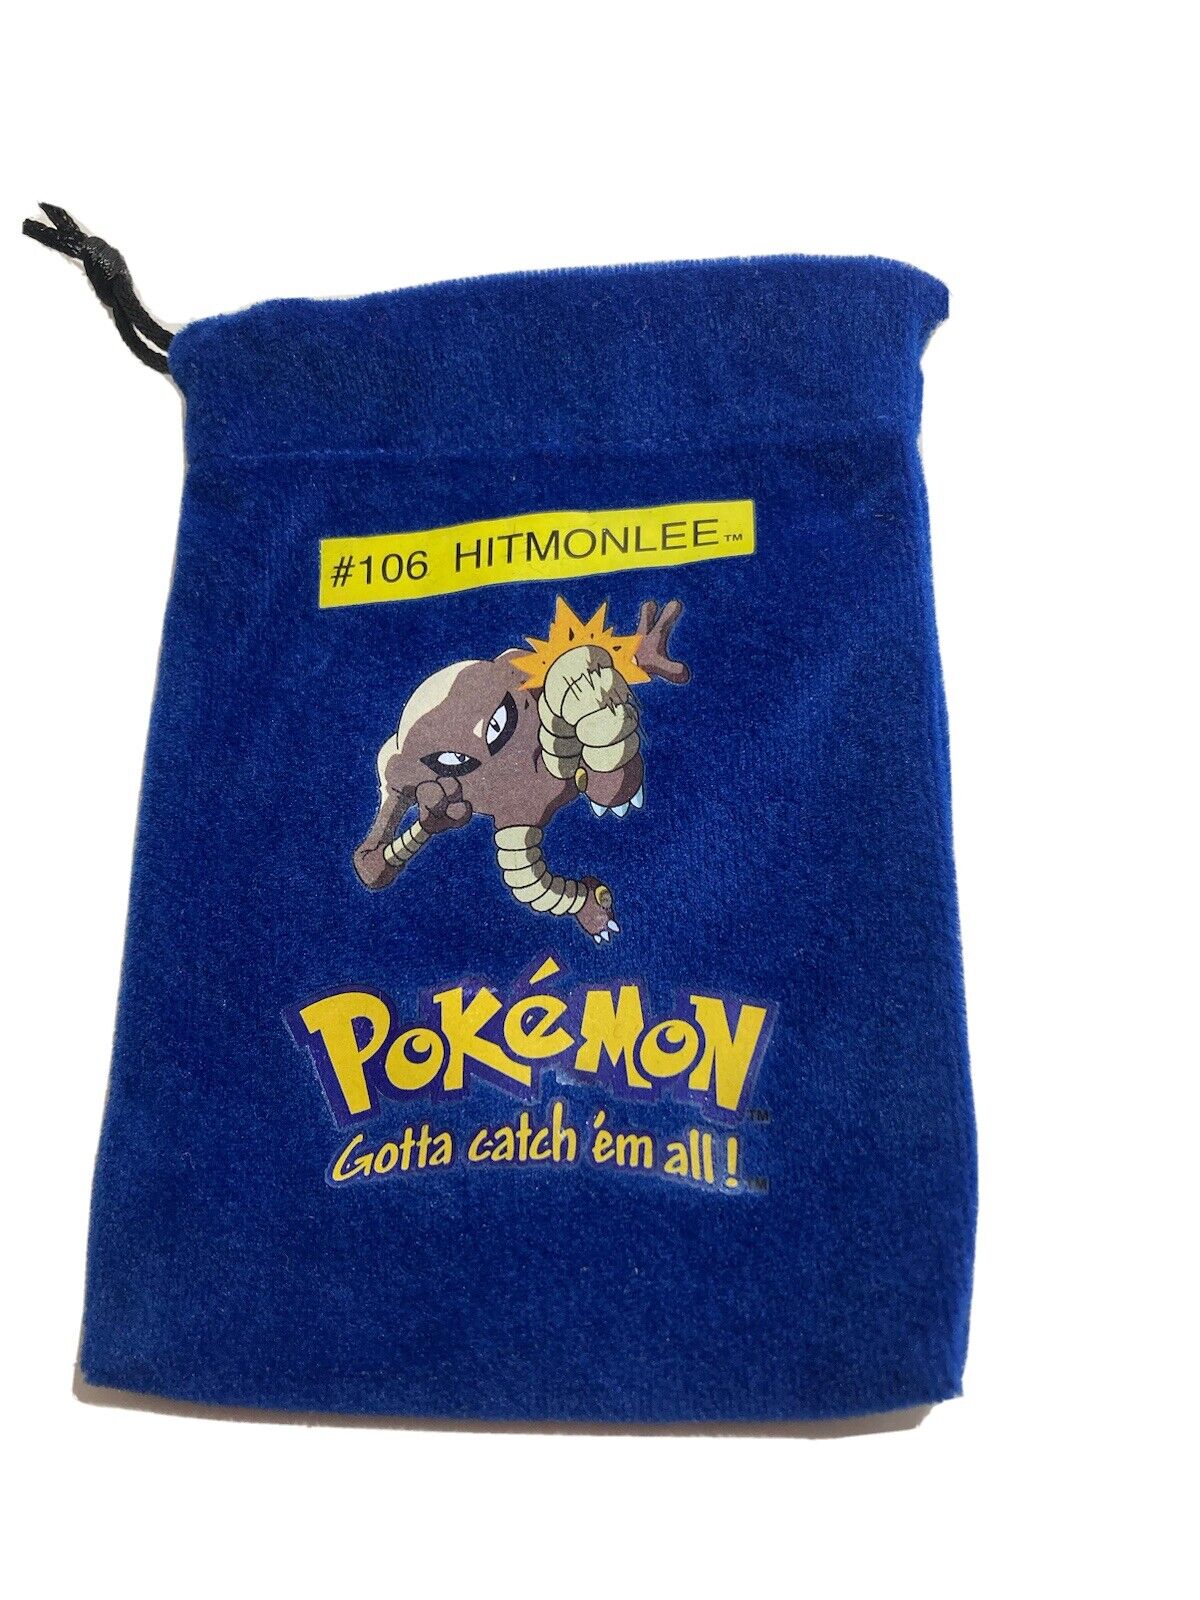 Vintage Pokémon 106 HITMONLEE blue drawstring marble bag /pouch